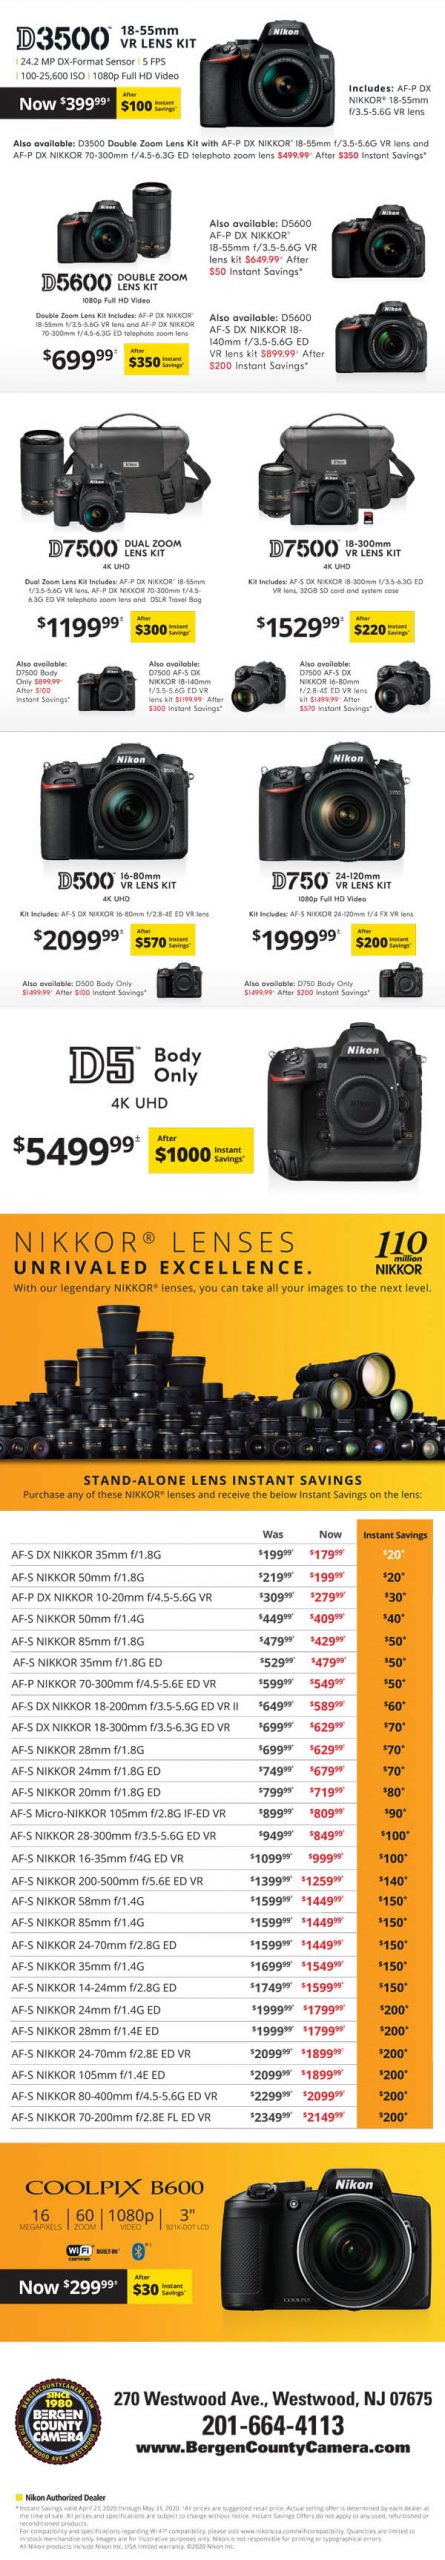 Nikon rebates that expire May 31st 2020